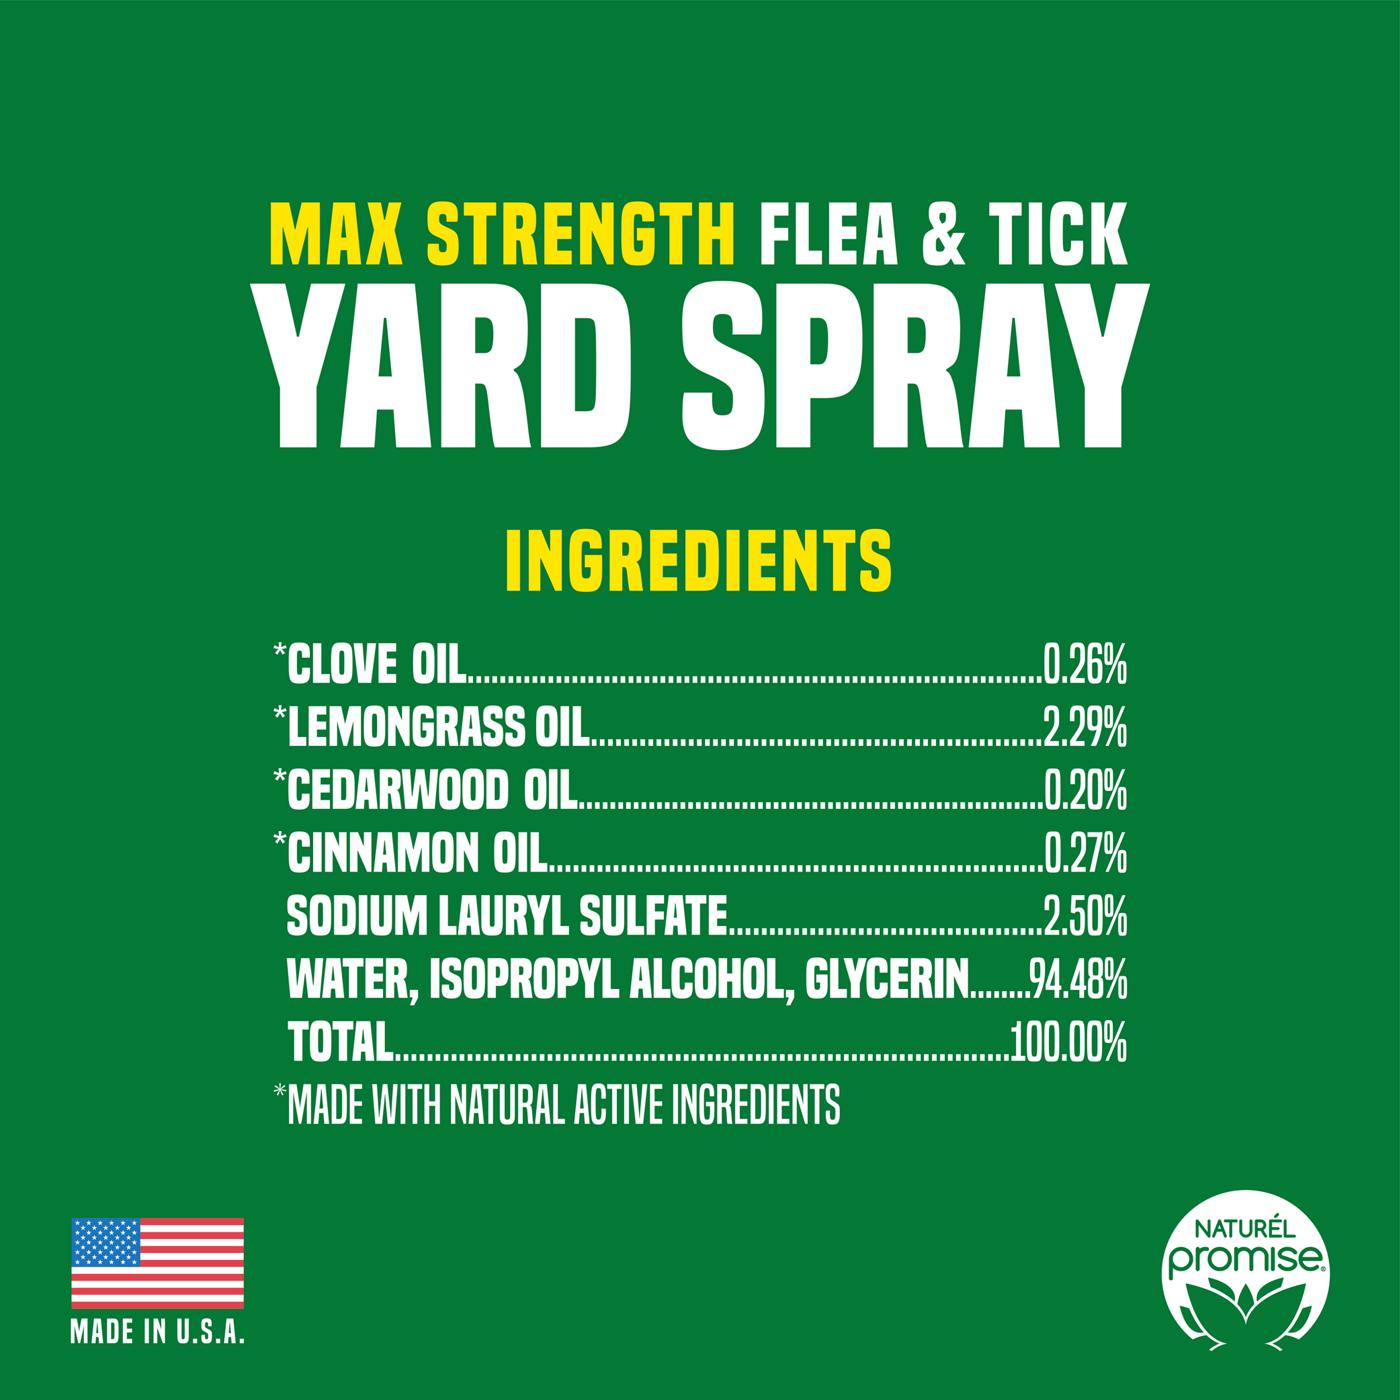 Flick! Max Strength Flea & Tick Yard Spray; image 4 of 7